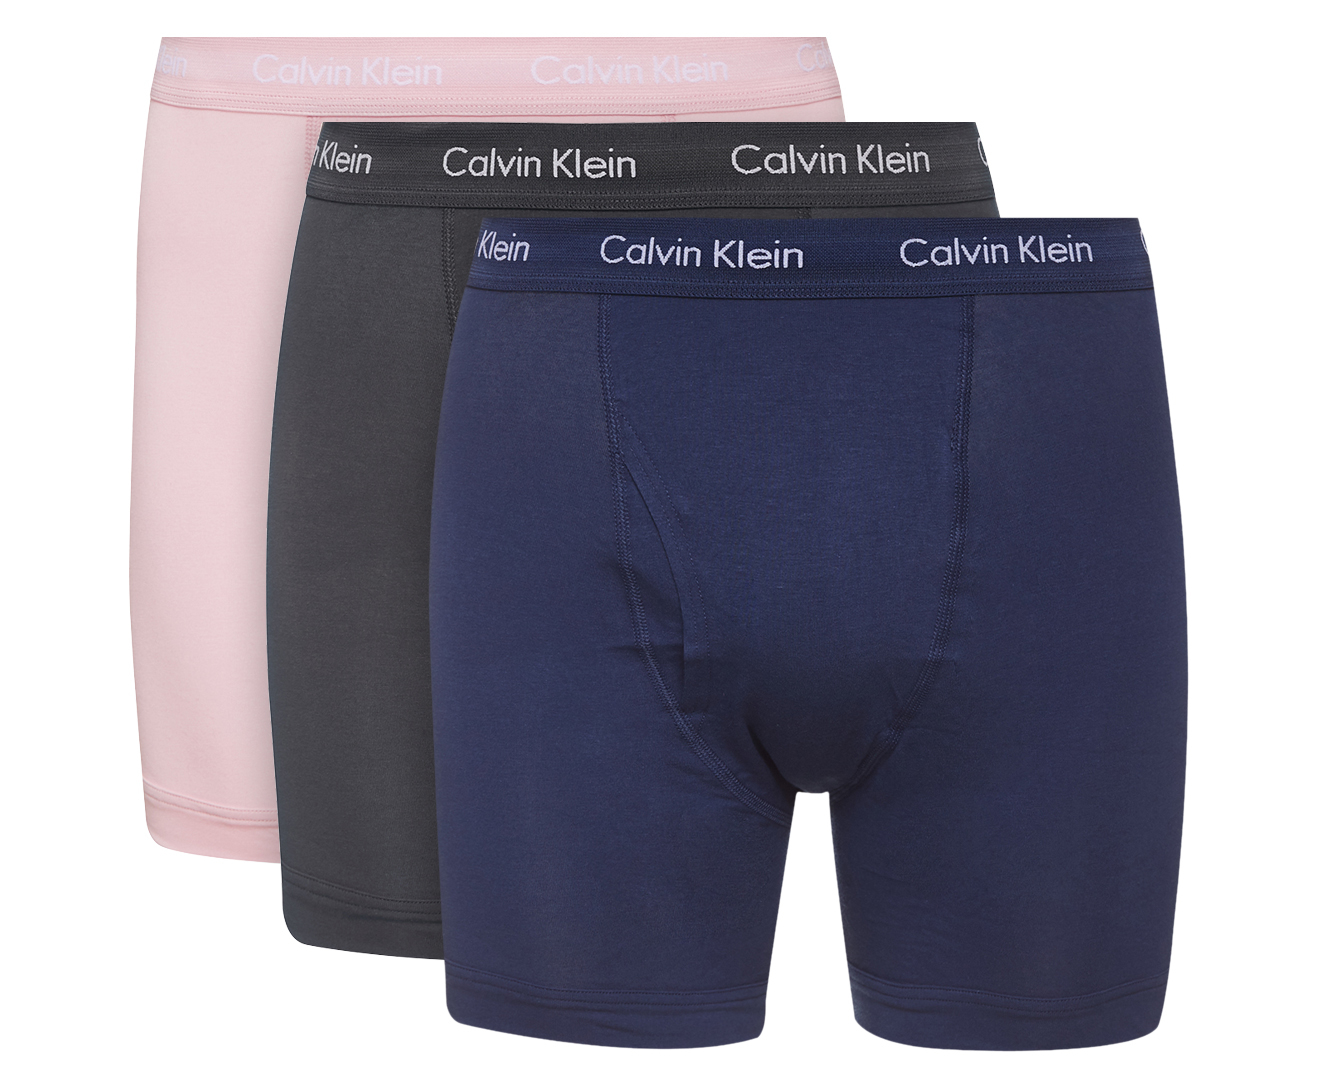 Calvin Klein Men's Cotton Stretch Boxer Brief 3-Pack - Multi 